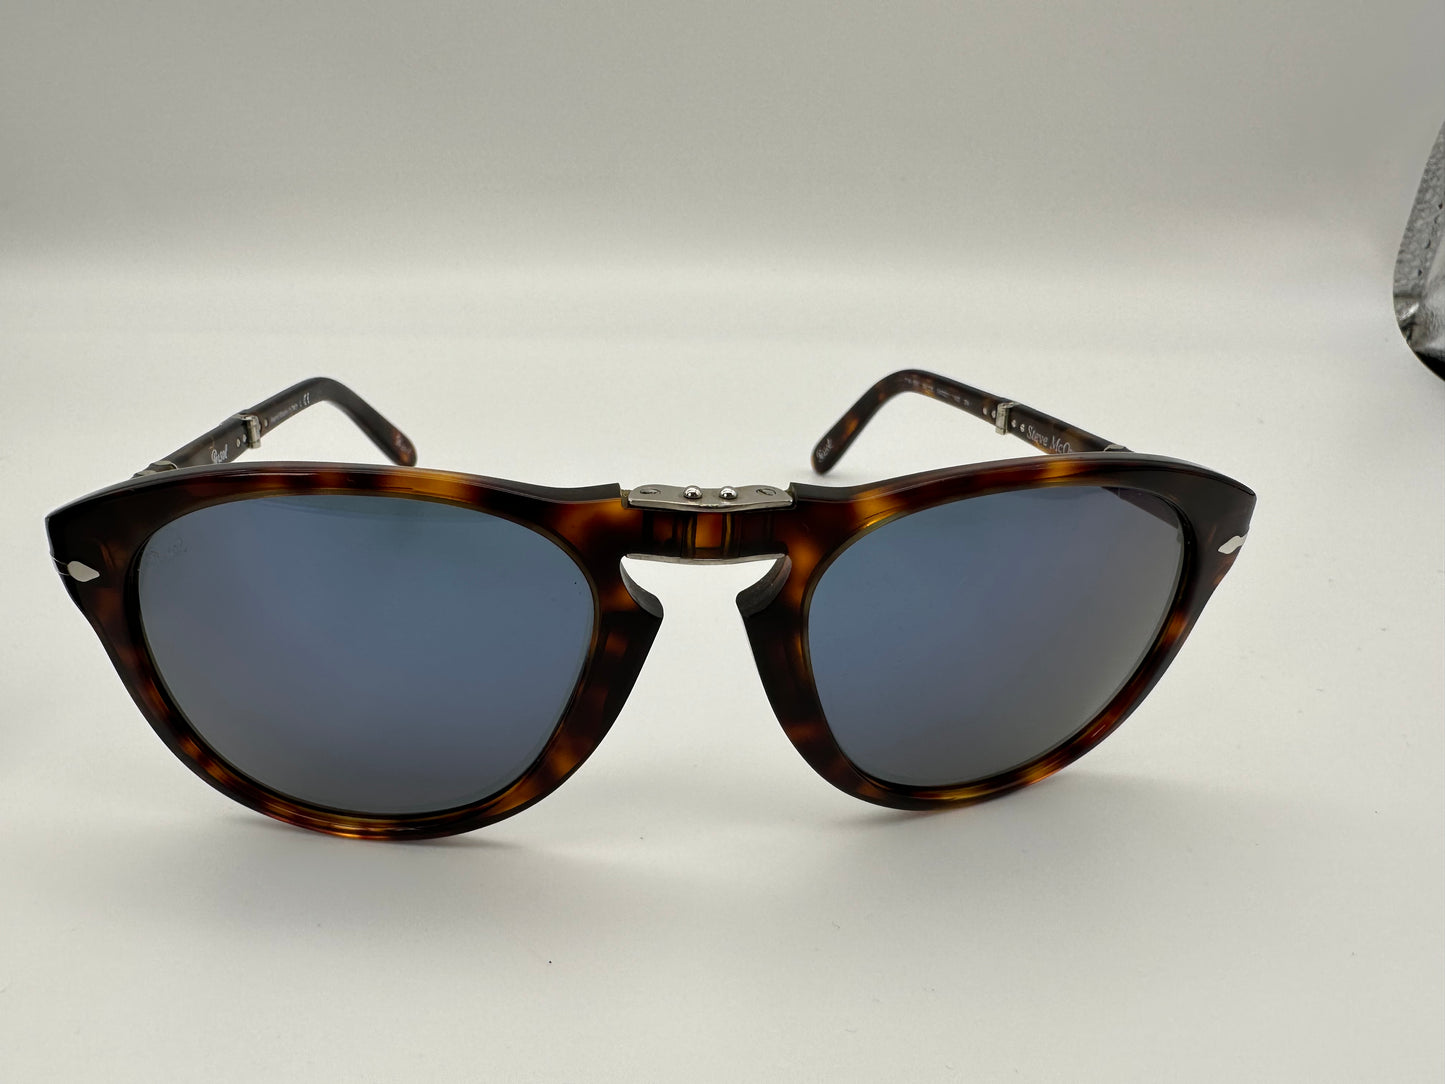 Persol PO 714 SM 54mm 24/56 Blue Havana Special Edition Steve McQueen Sunglasses PREOWNED